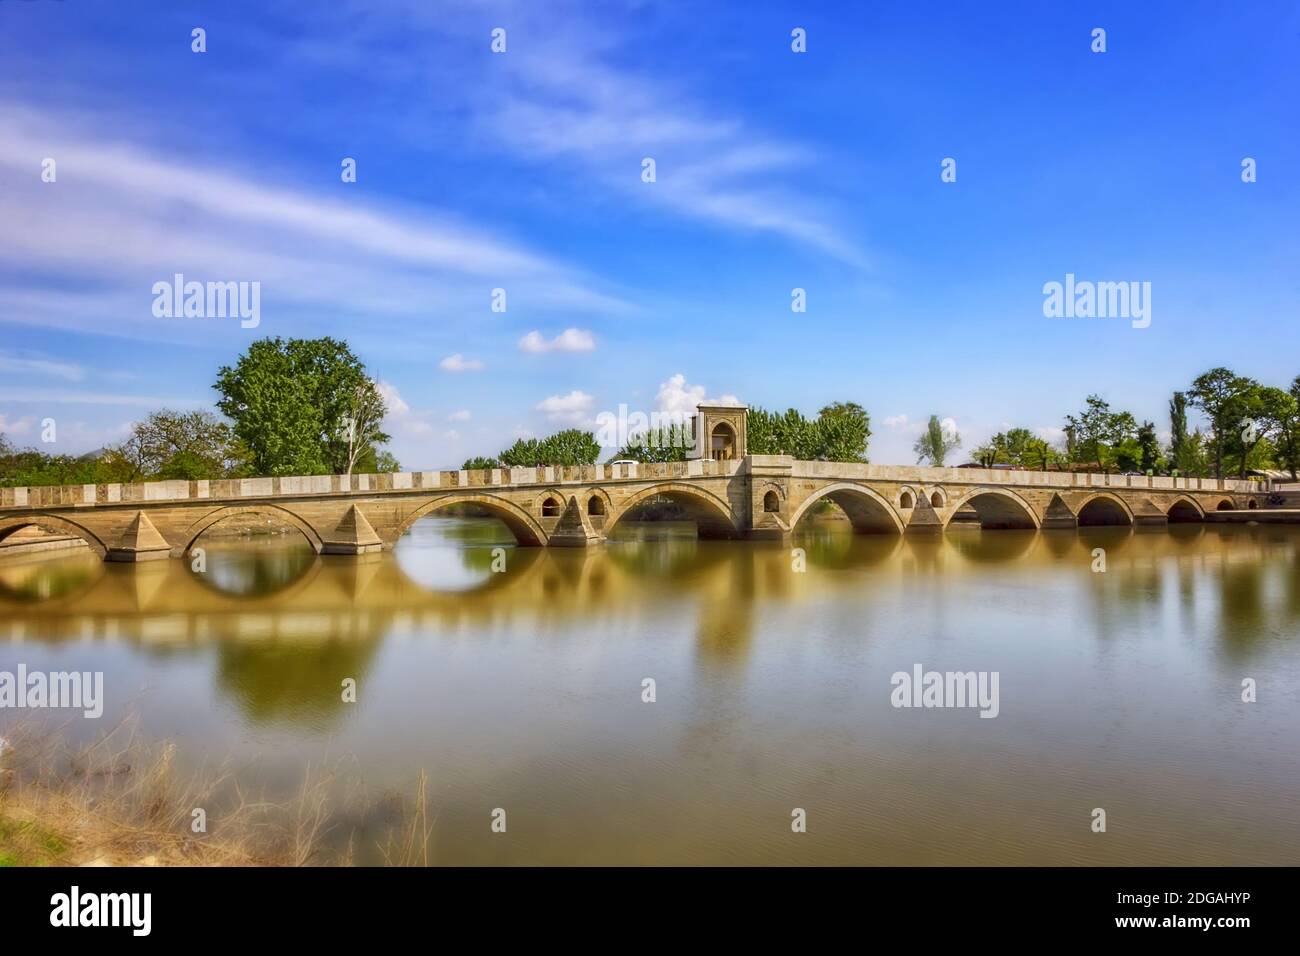 Puente espectacular Foto de stock